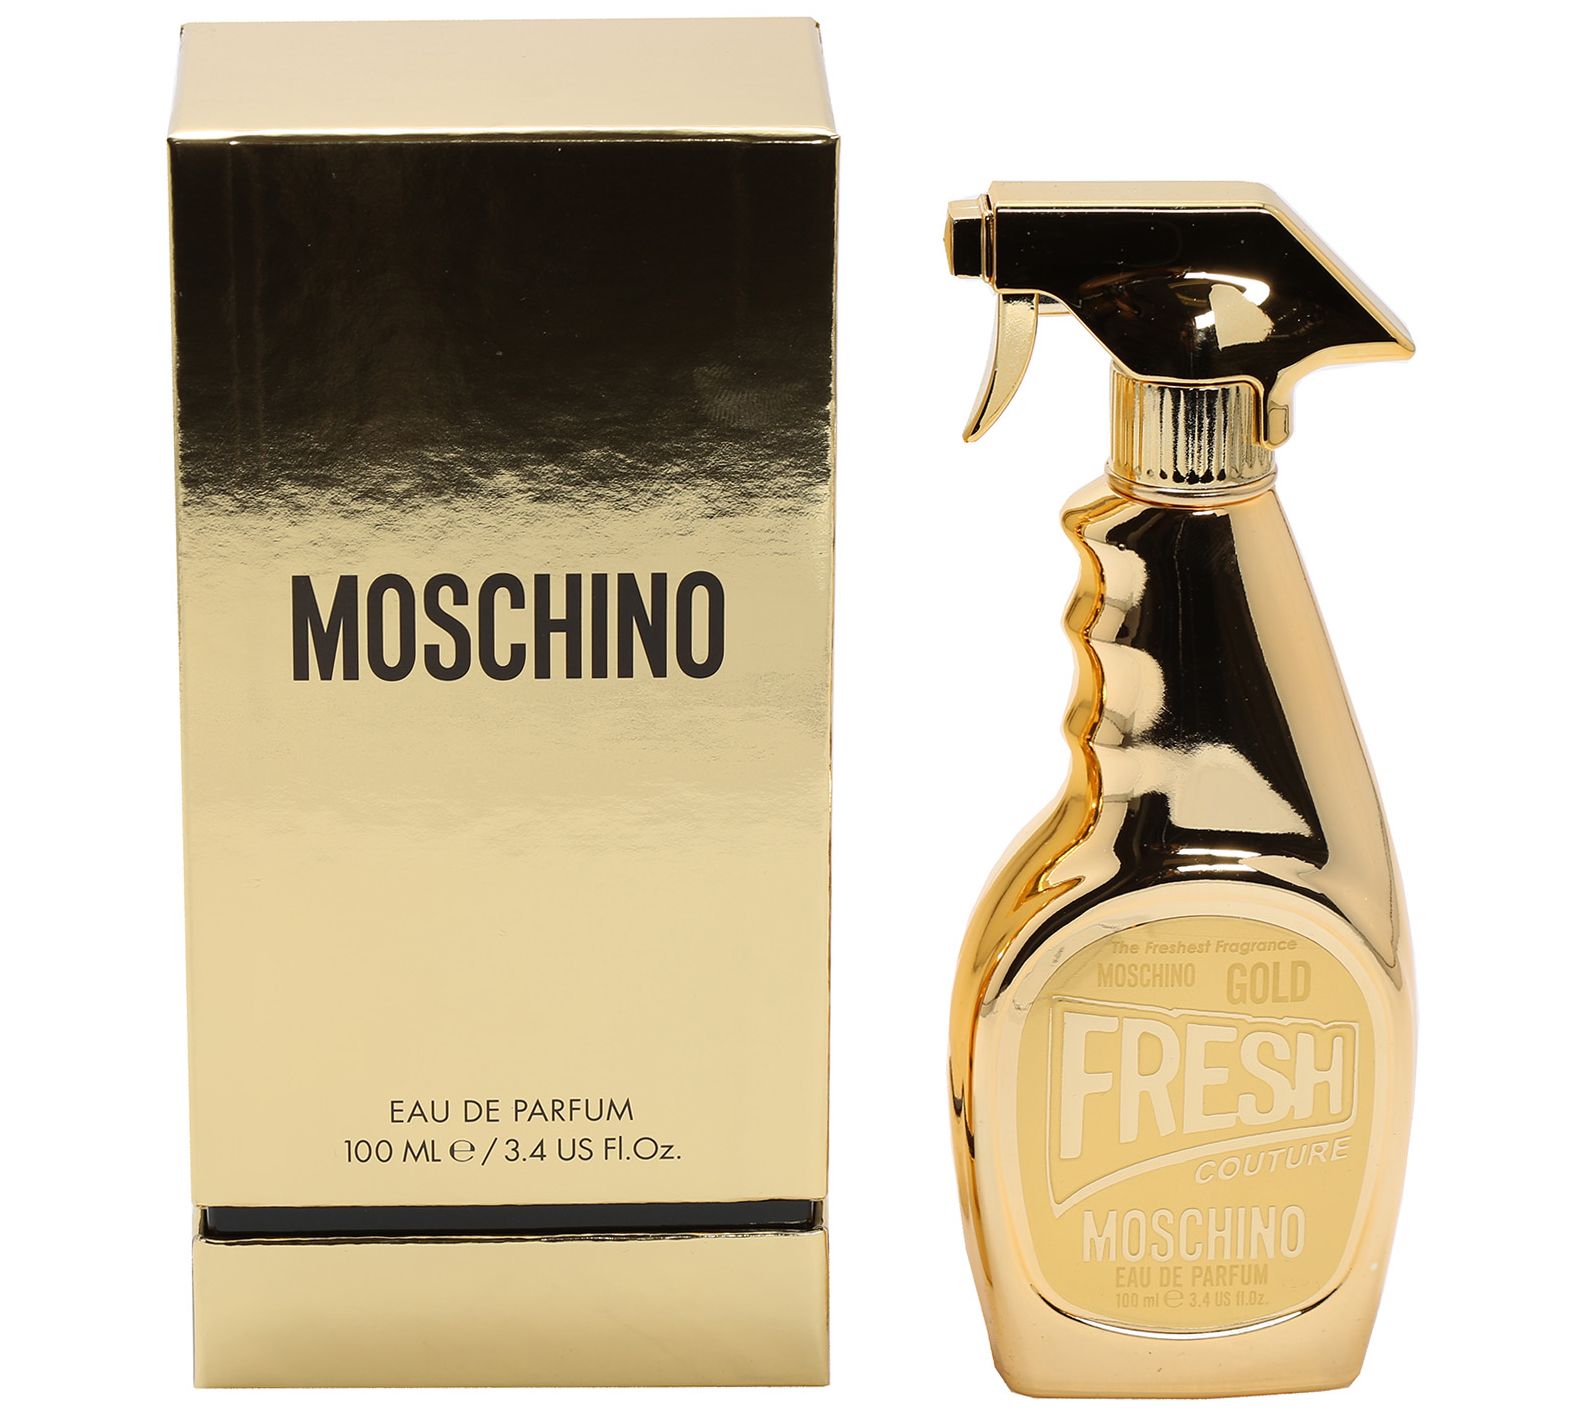 Moschino Gold Fresh Couture 30мл. Moschino Fresh Gold 100 мл. Moschino Gold Fresh аромат. Голд Москино женские. Москино духи золотые